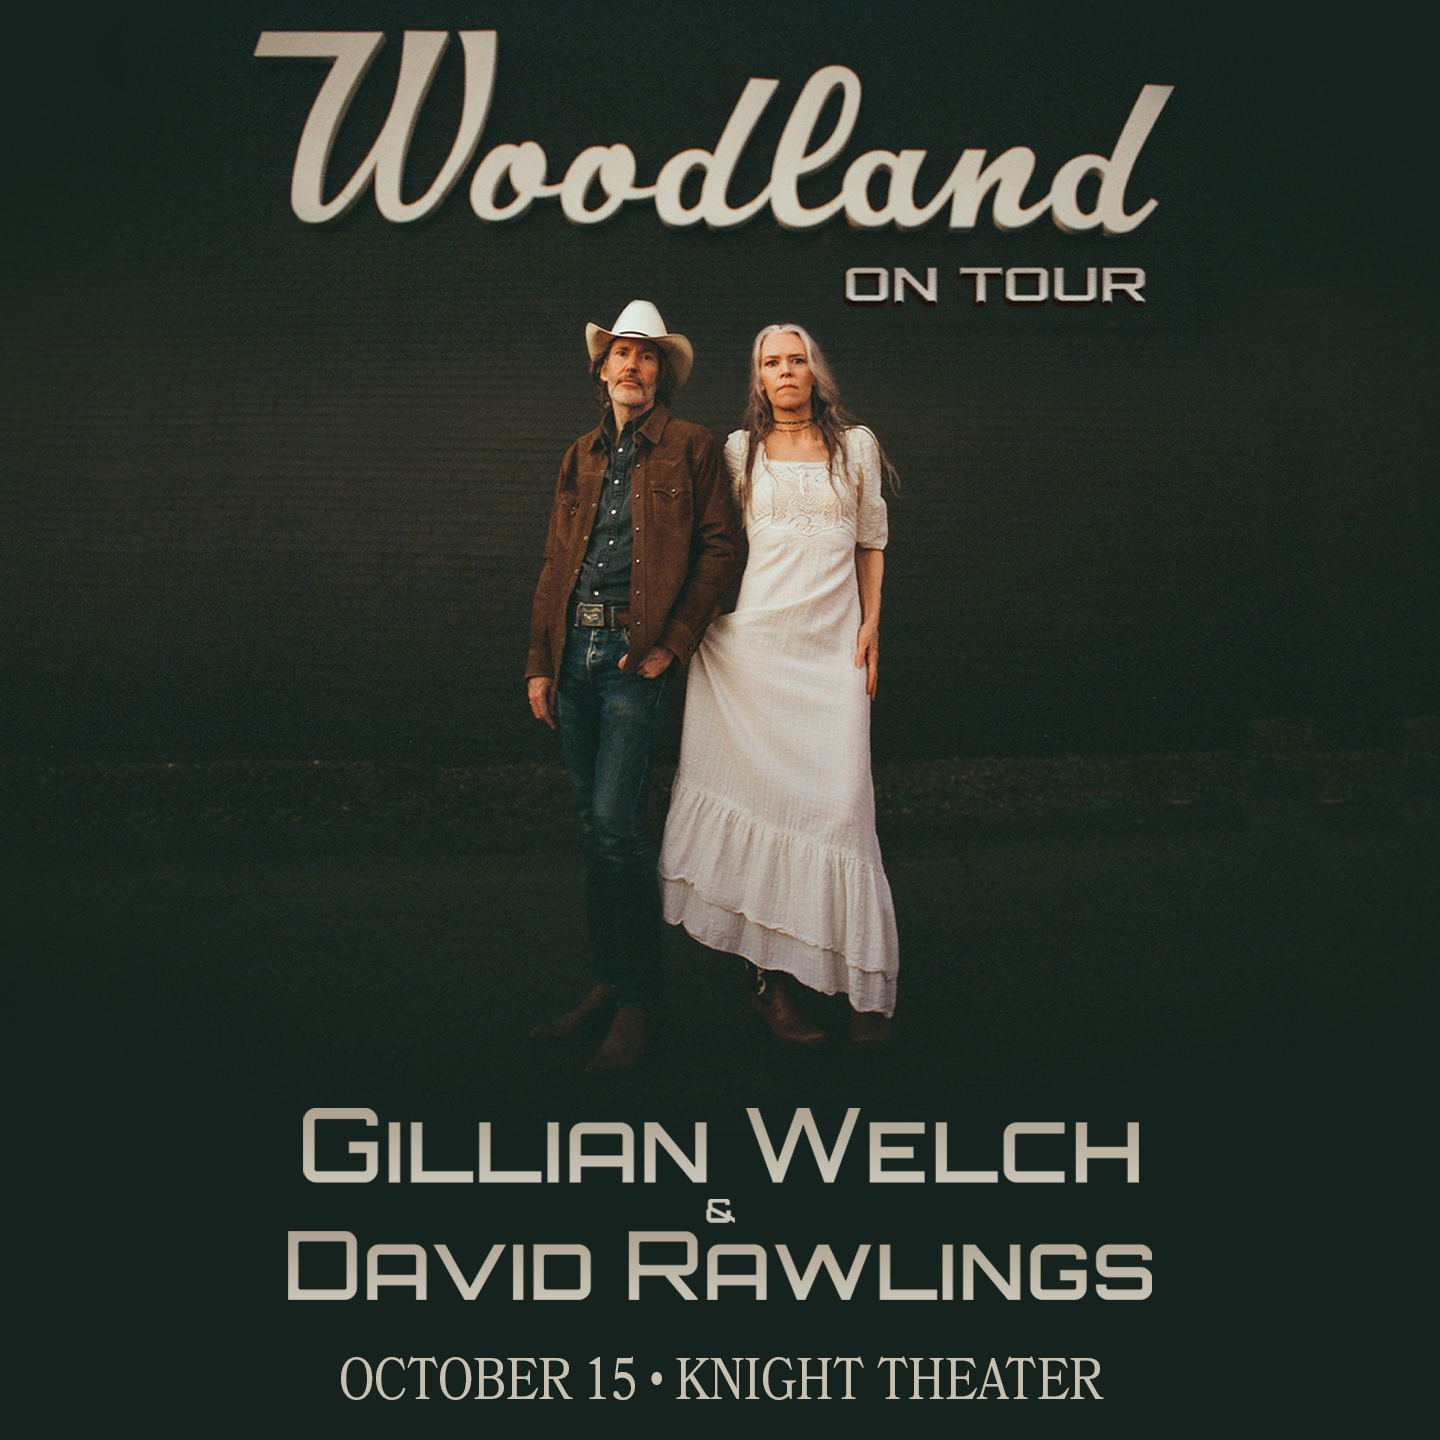 Gillian Welch & David Rawlings